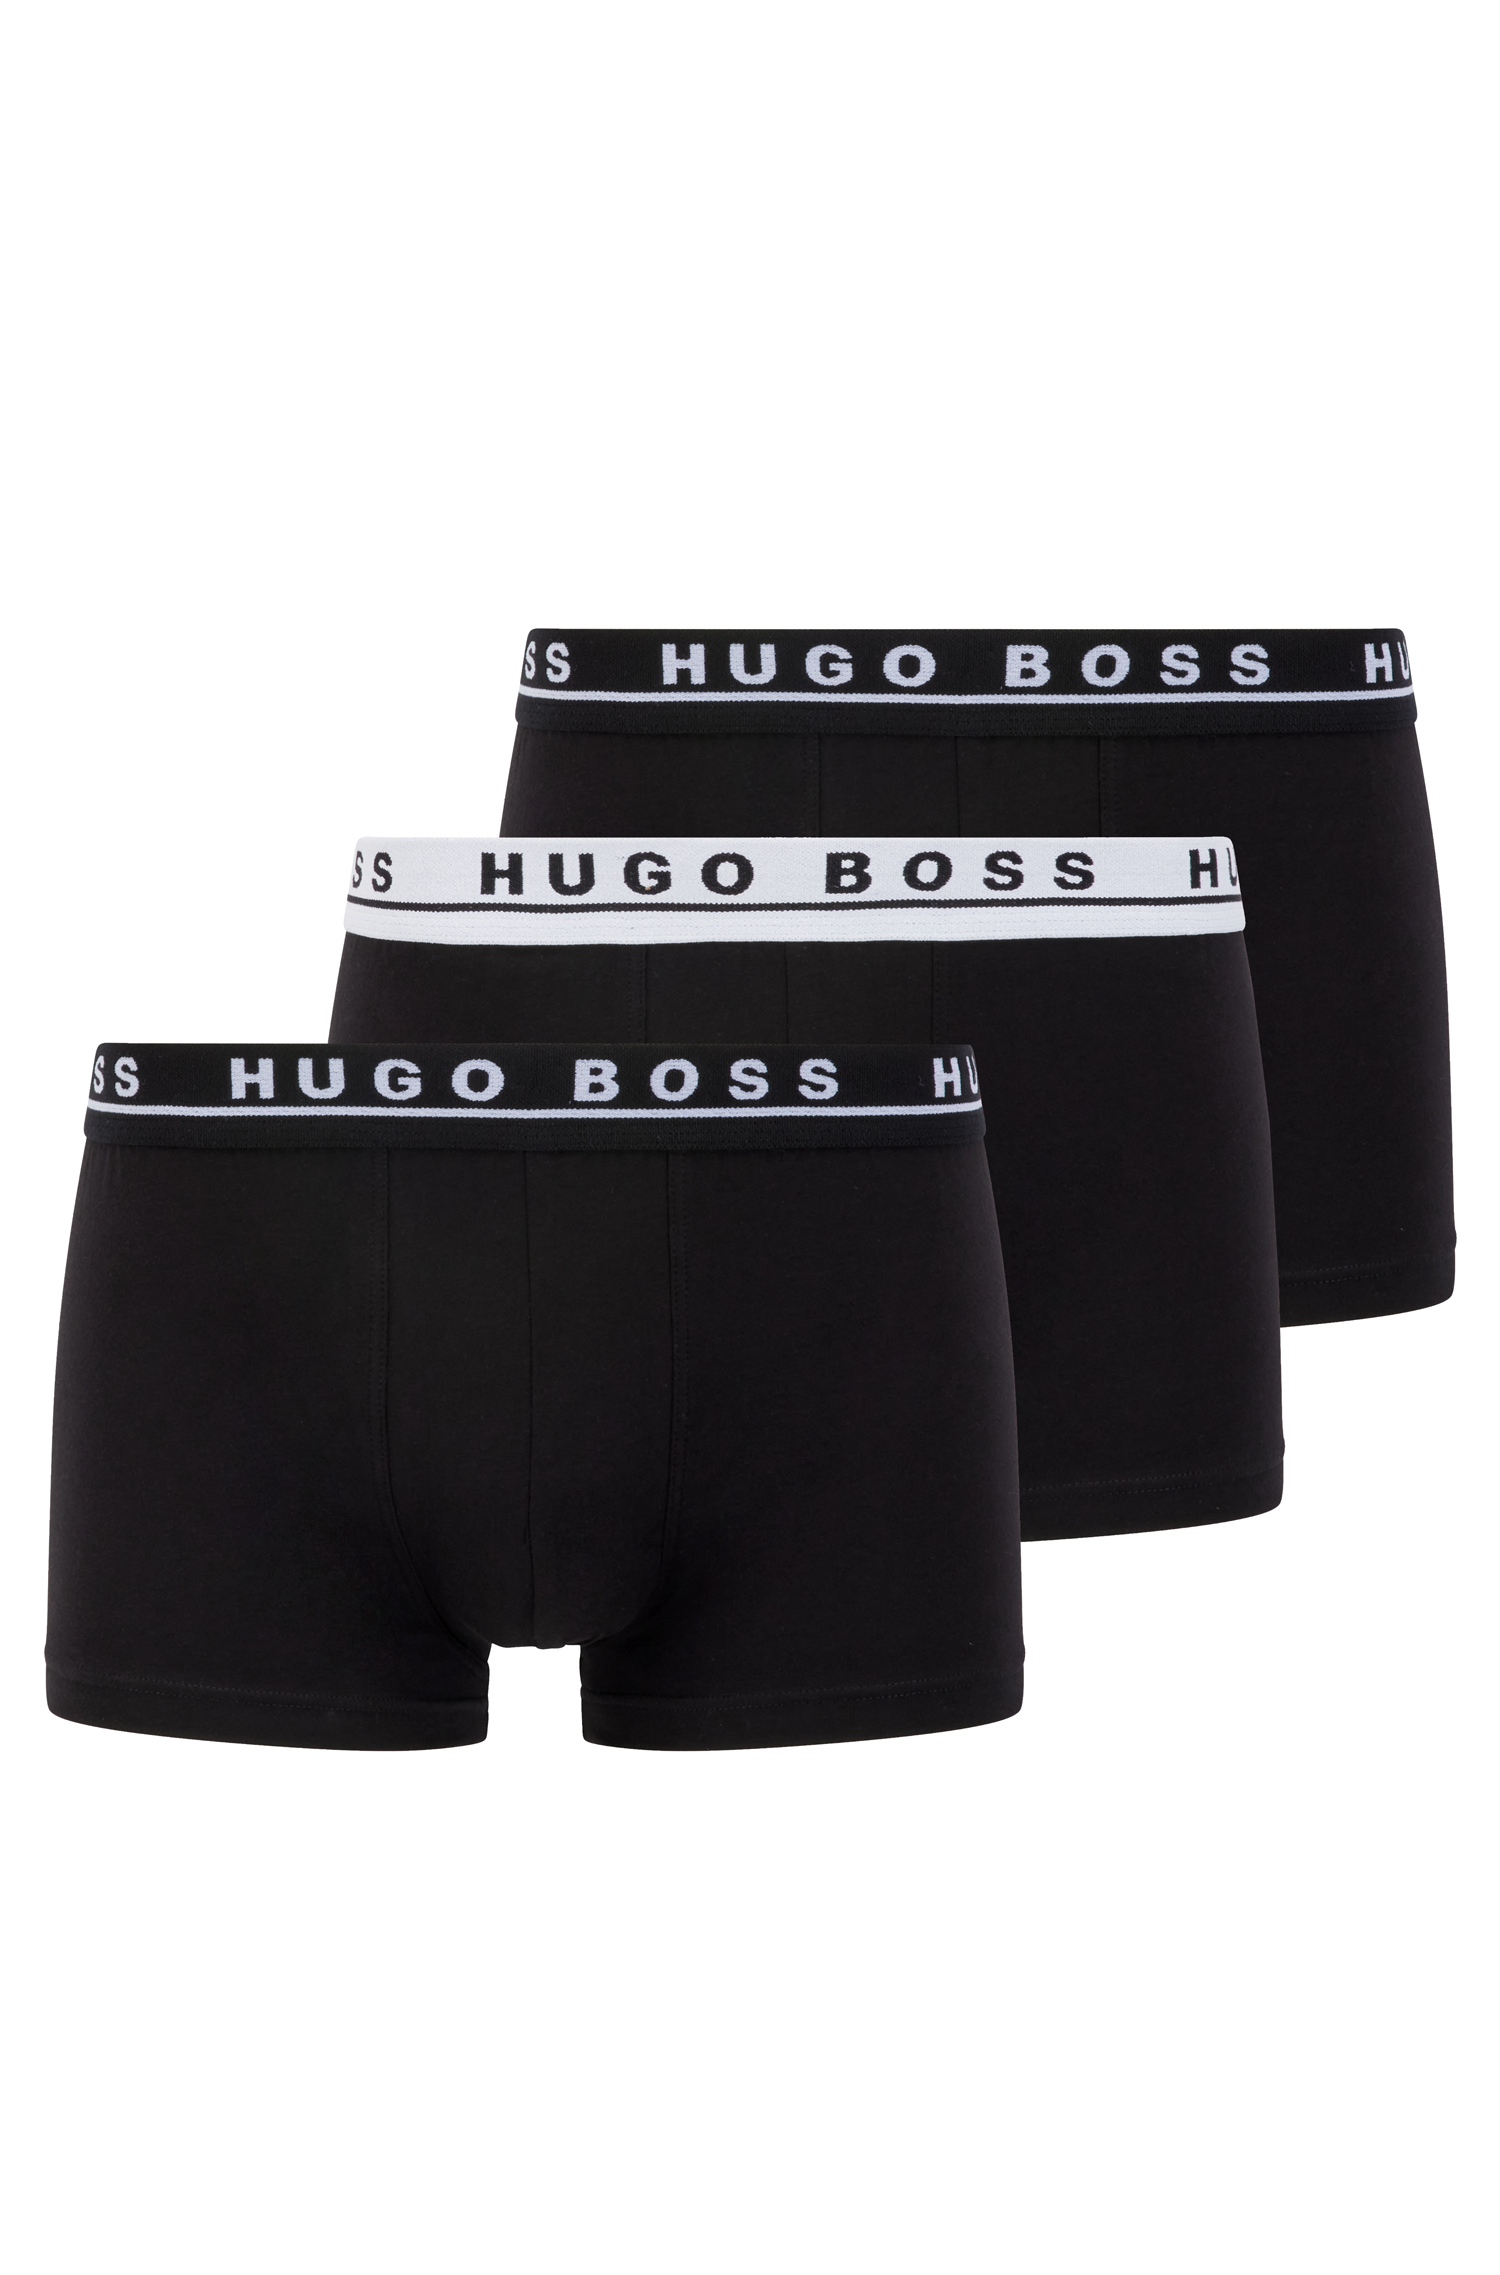 Hugo Boss 3-Pak Underbukser, Sort, XL